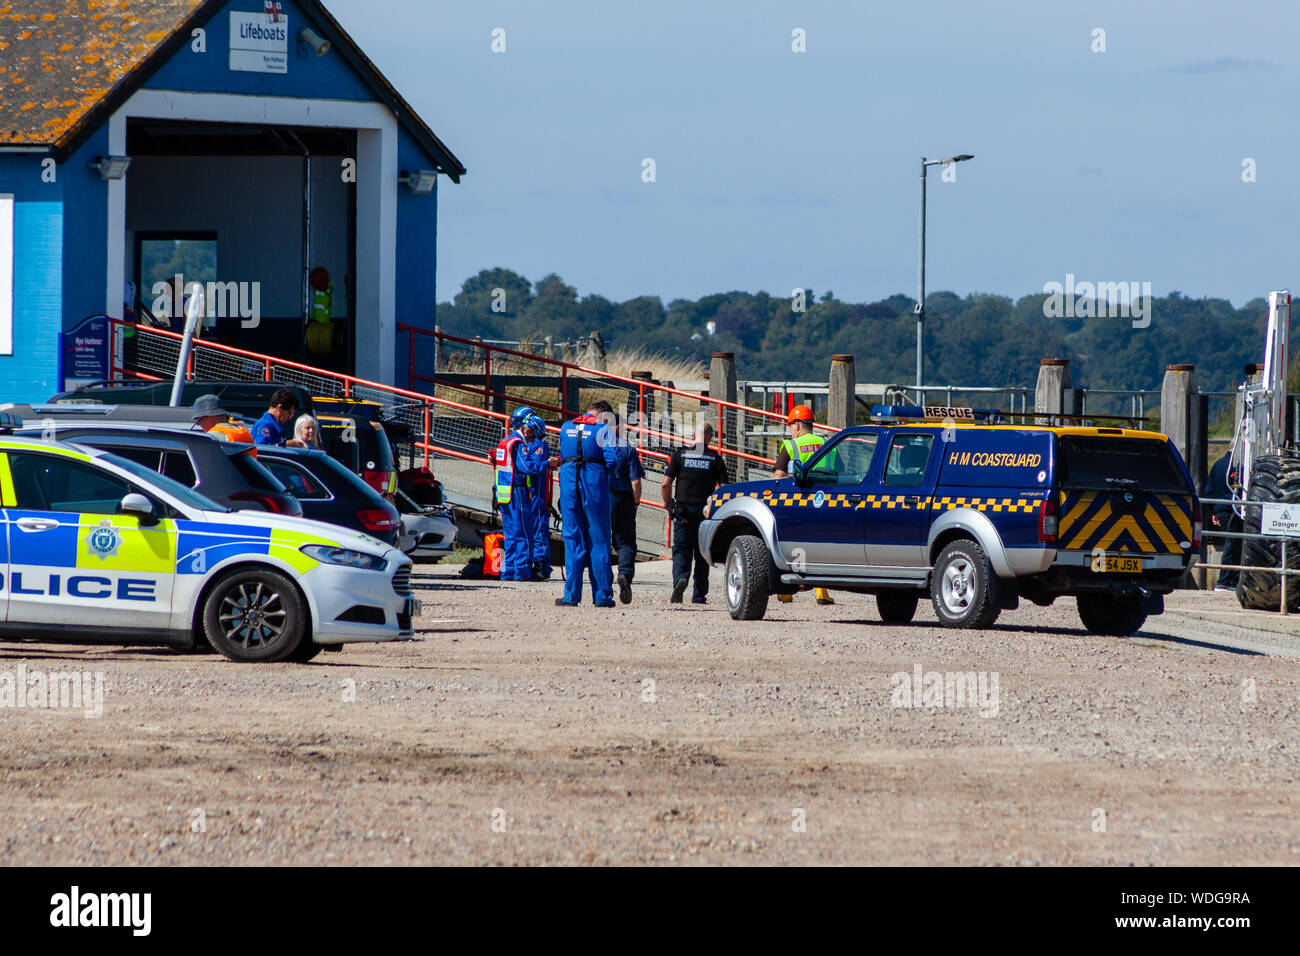 Police and HM Coastguard vehicles. Stock Photo